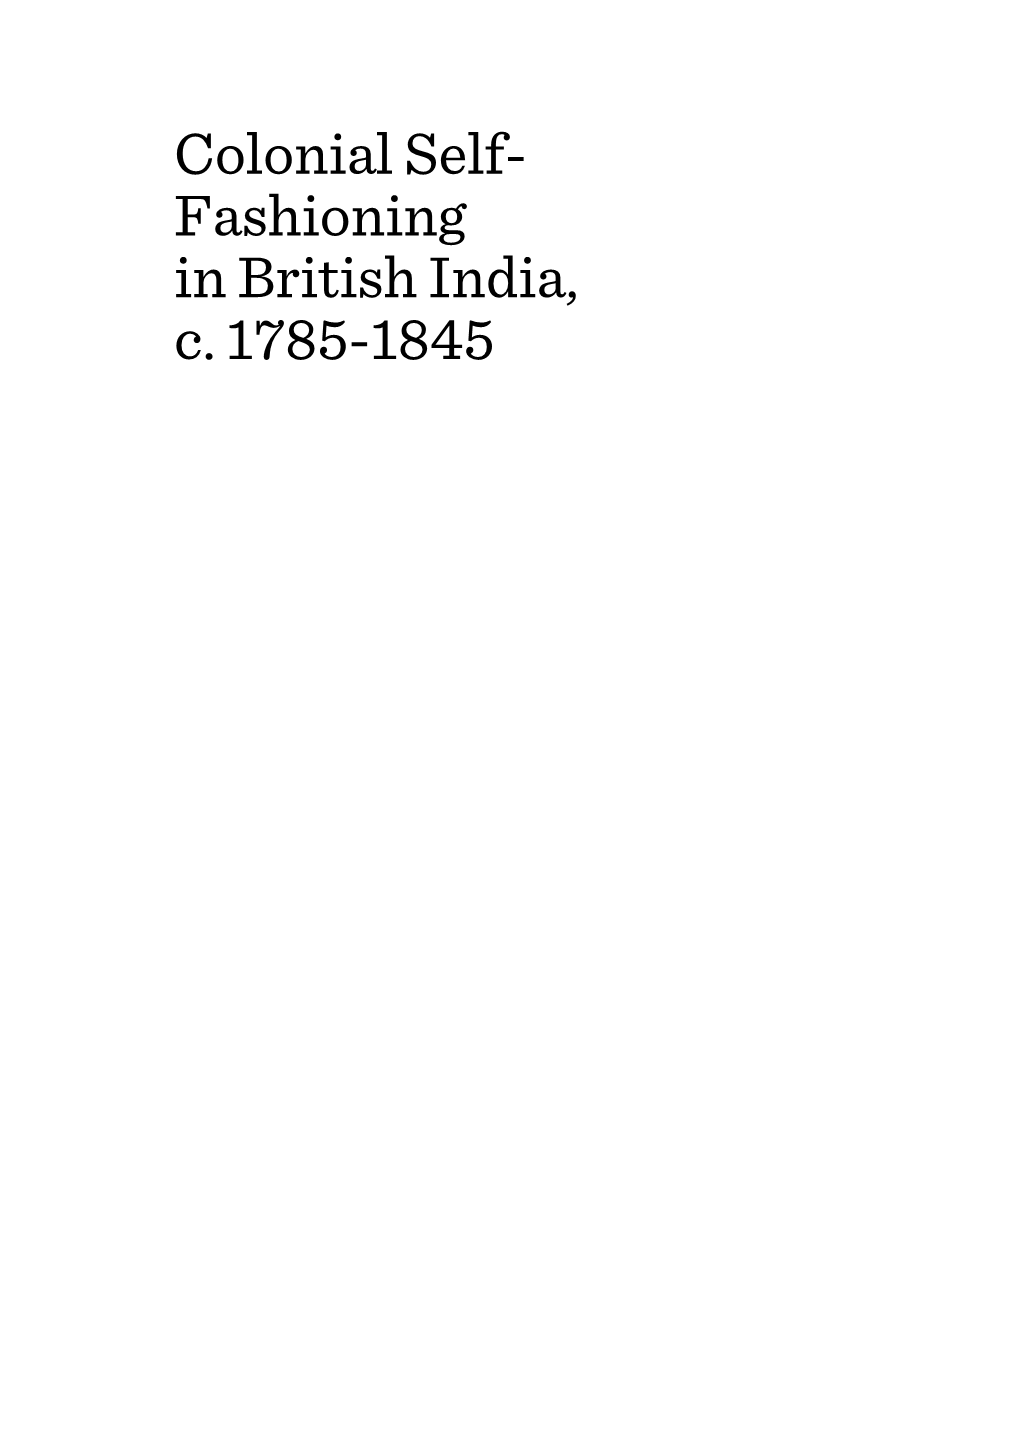 Colonial Self- Fashioning in British India, C. 1785-1845